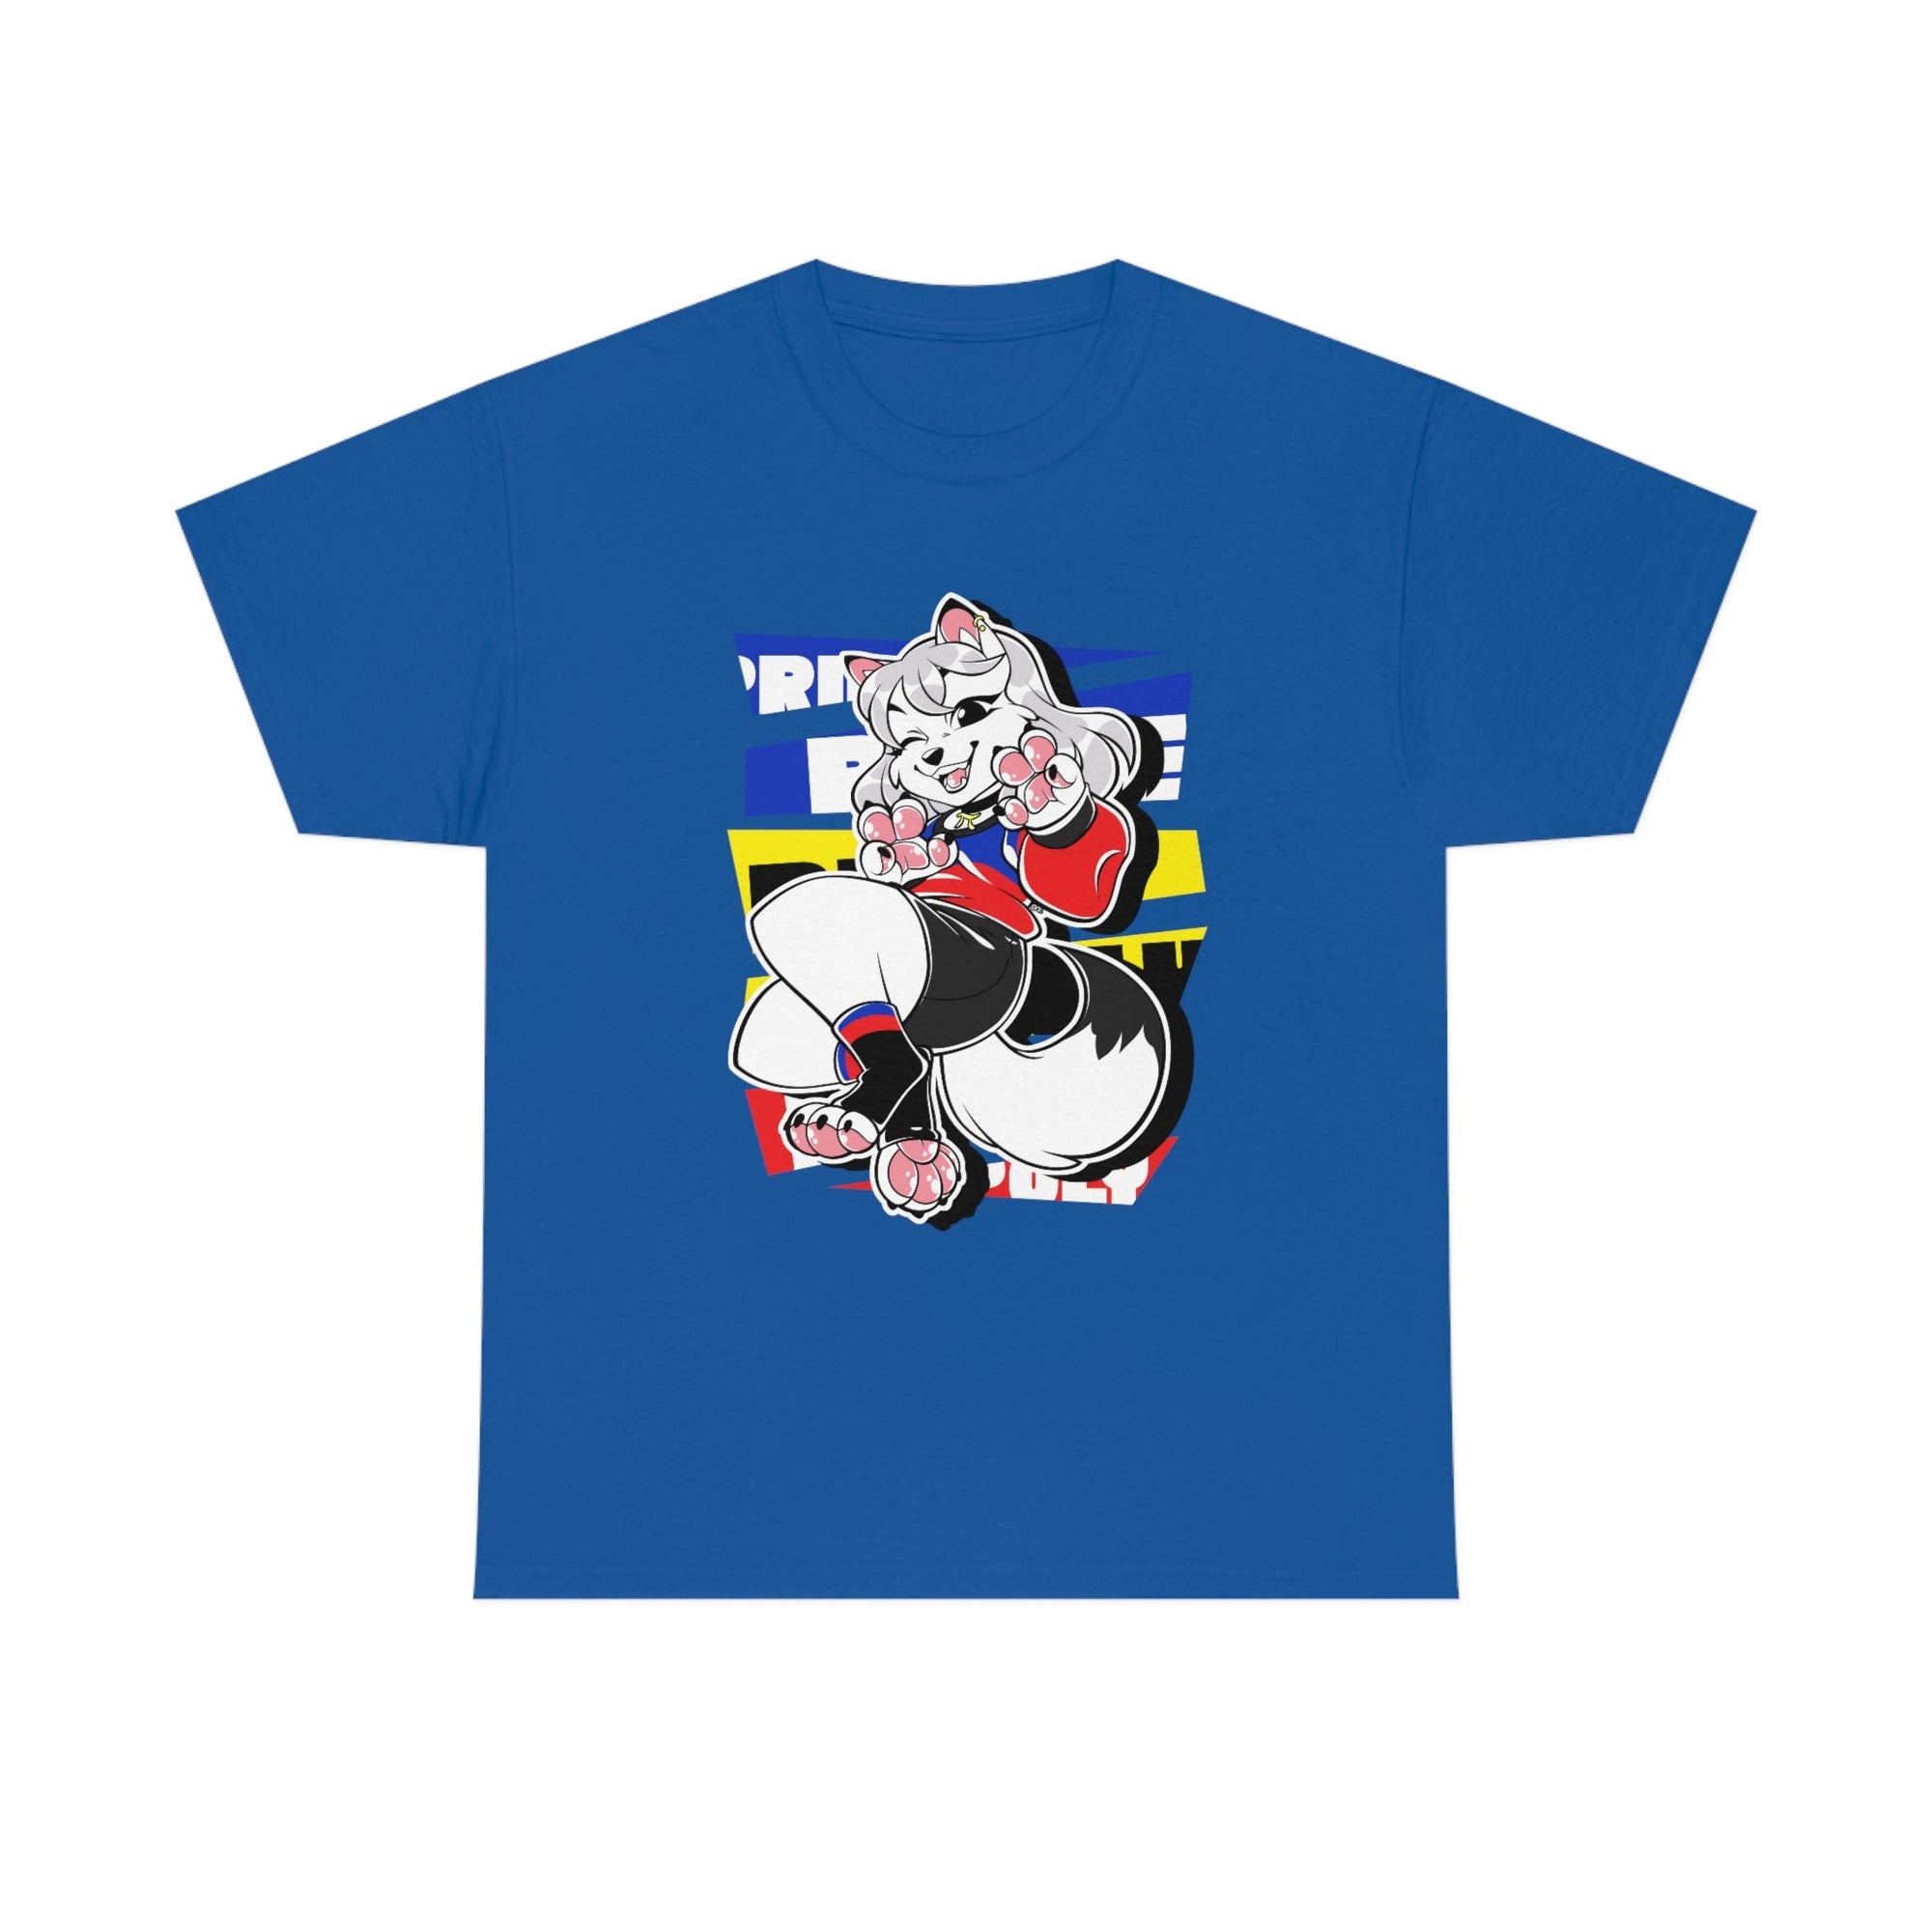 Polyamorous Pride Riley Arctic Fox - T-Shirt T-Shirt Artworktee Royal Blue S 